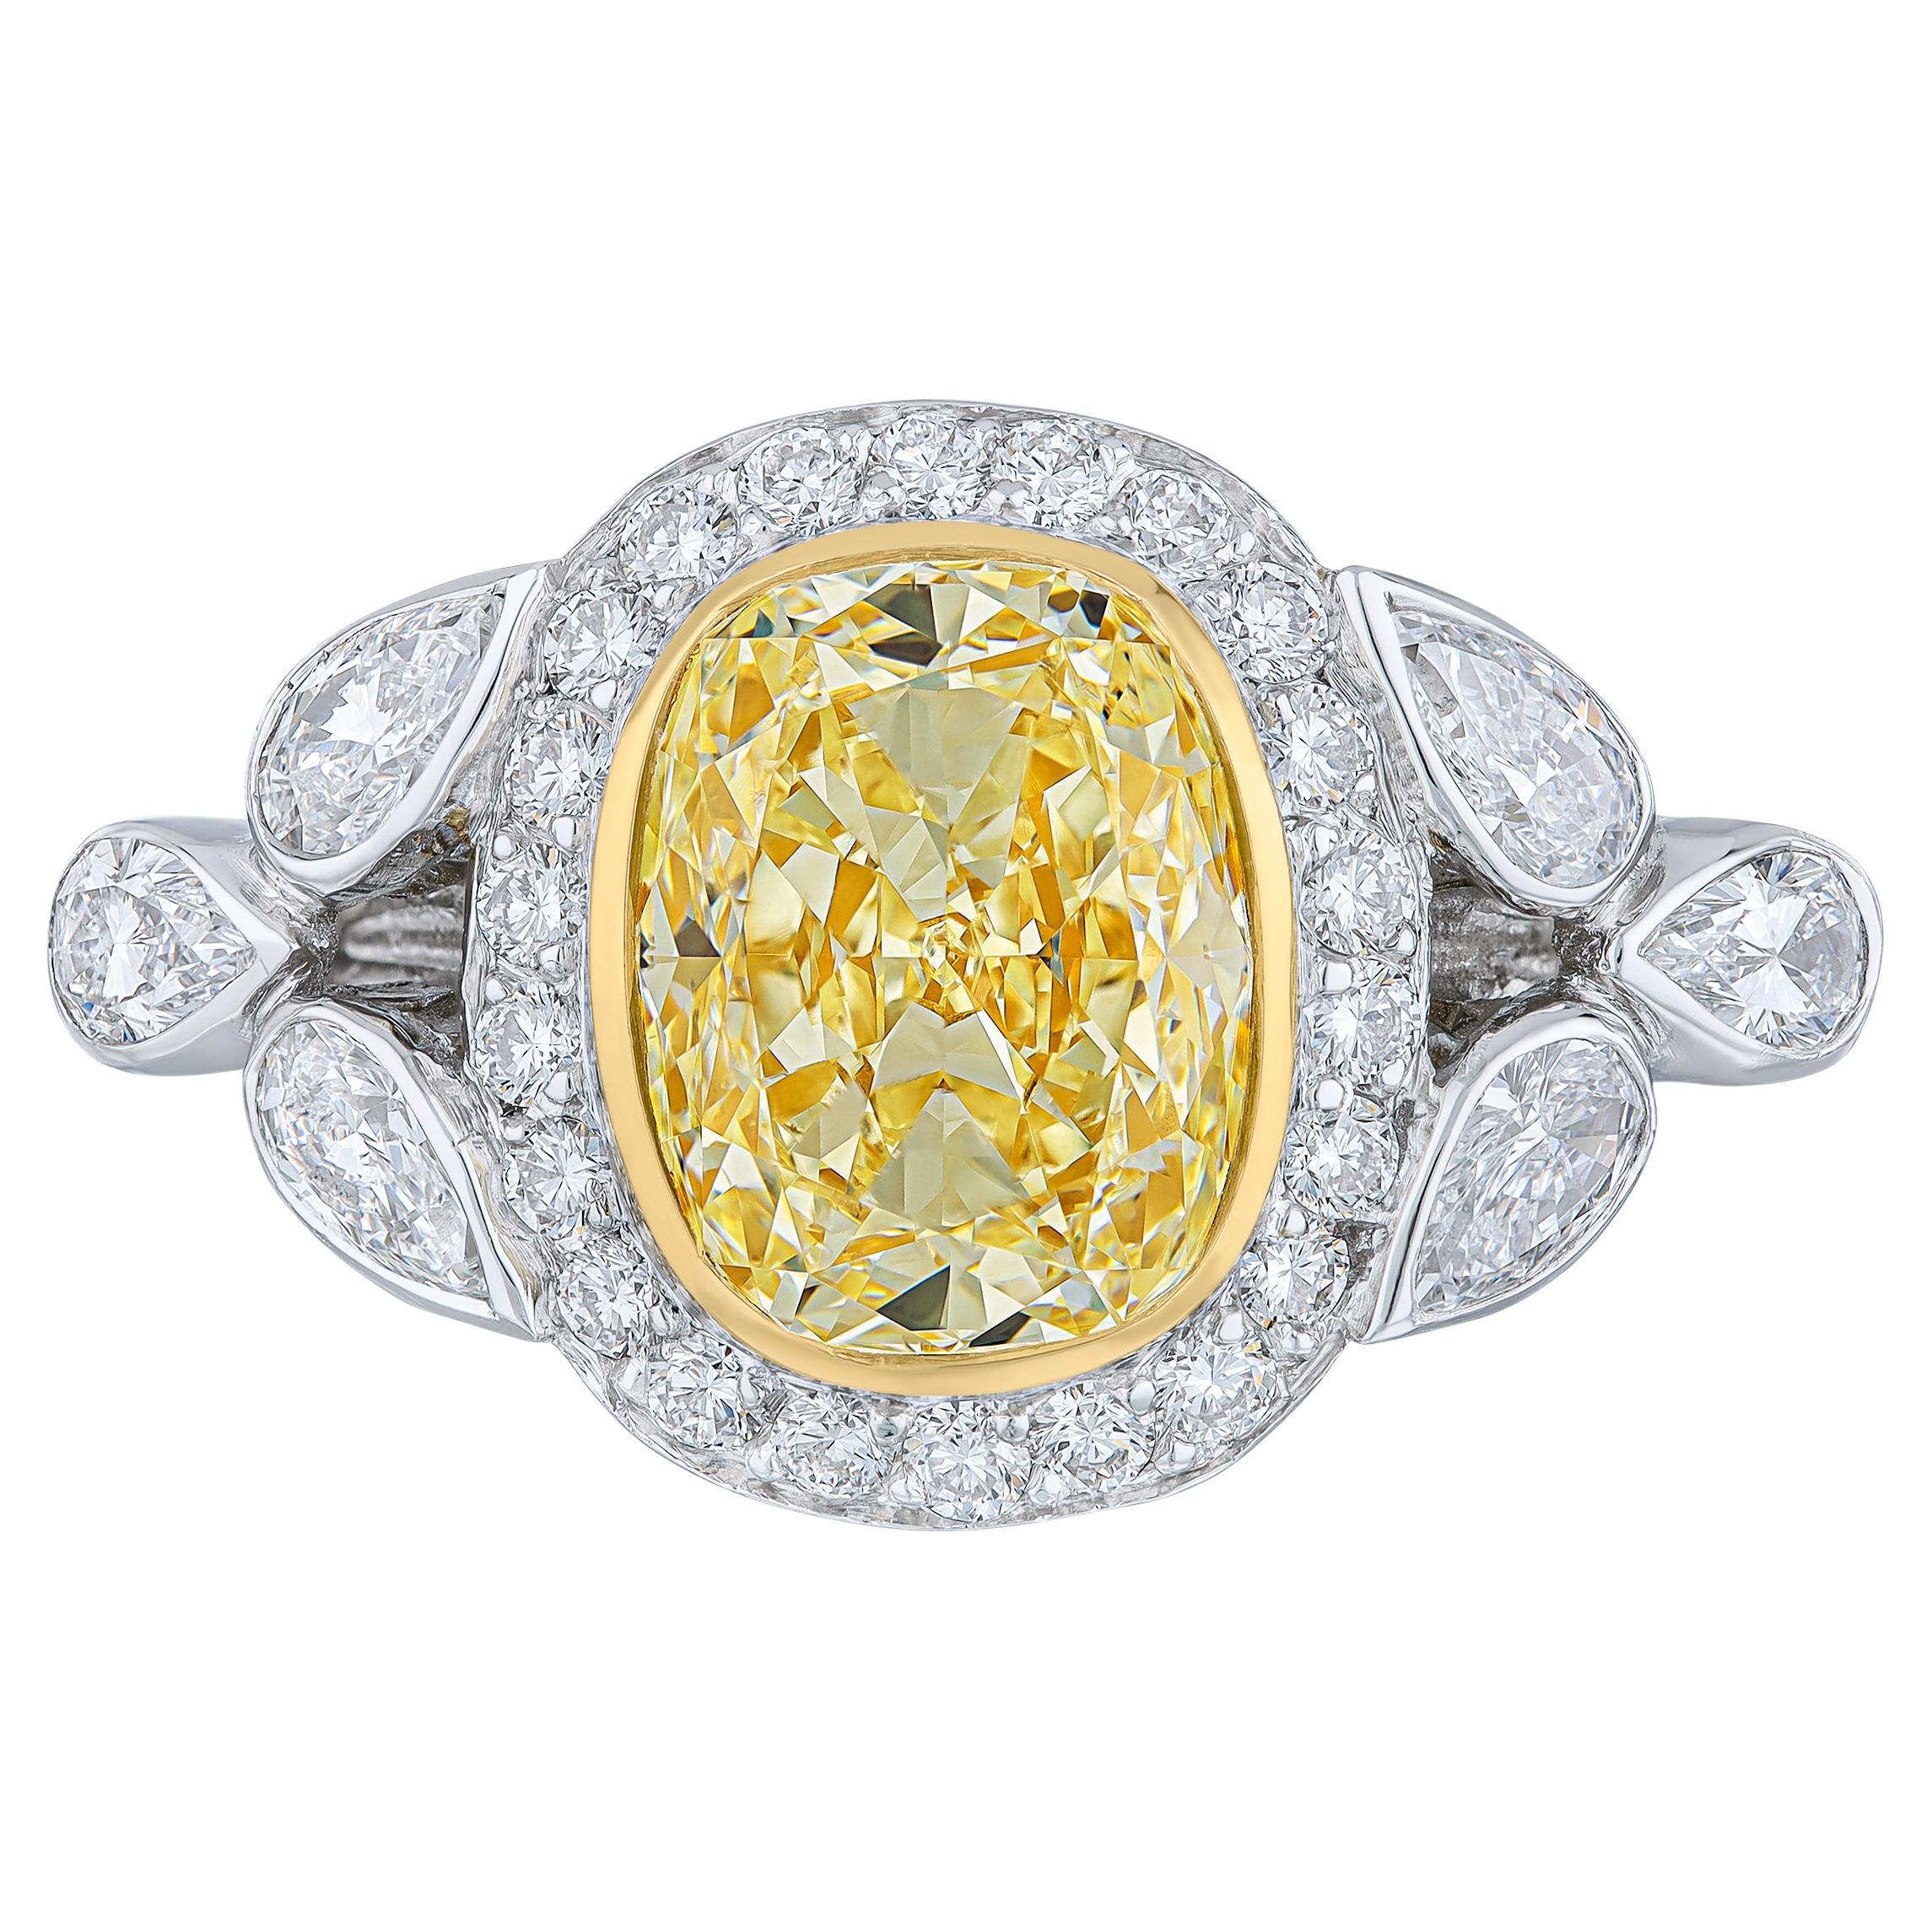 Yellow Diamond 3.03 Ct Certified Diamond Ring in Platinum